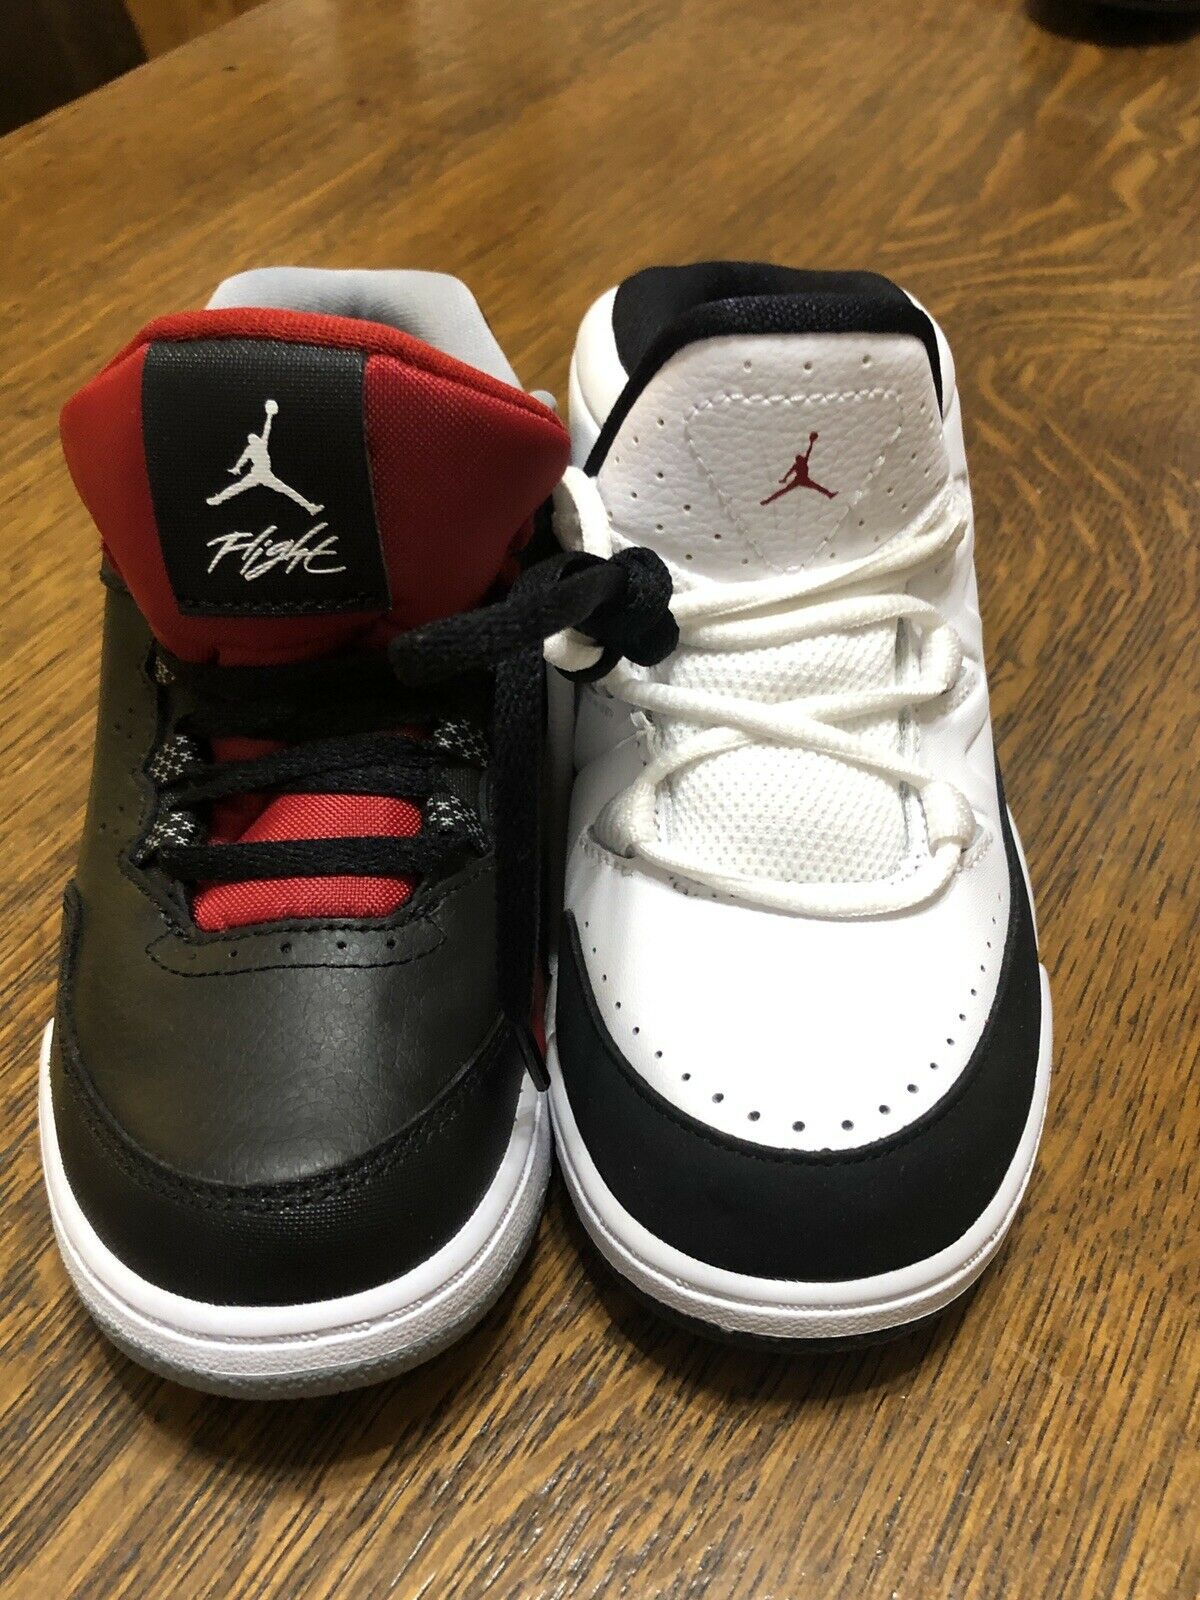 Nike Air Jordan 10c mismatched shoes same size different color and style J1 CV20